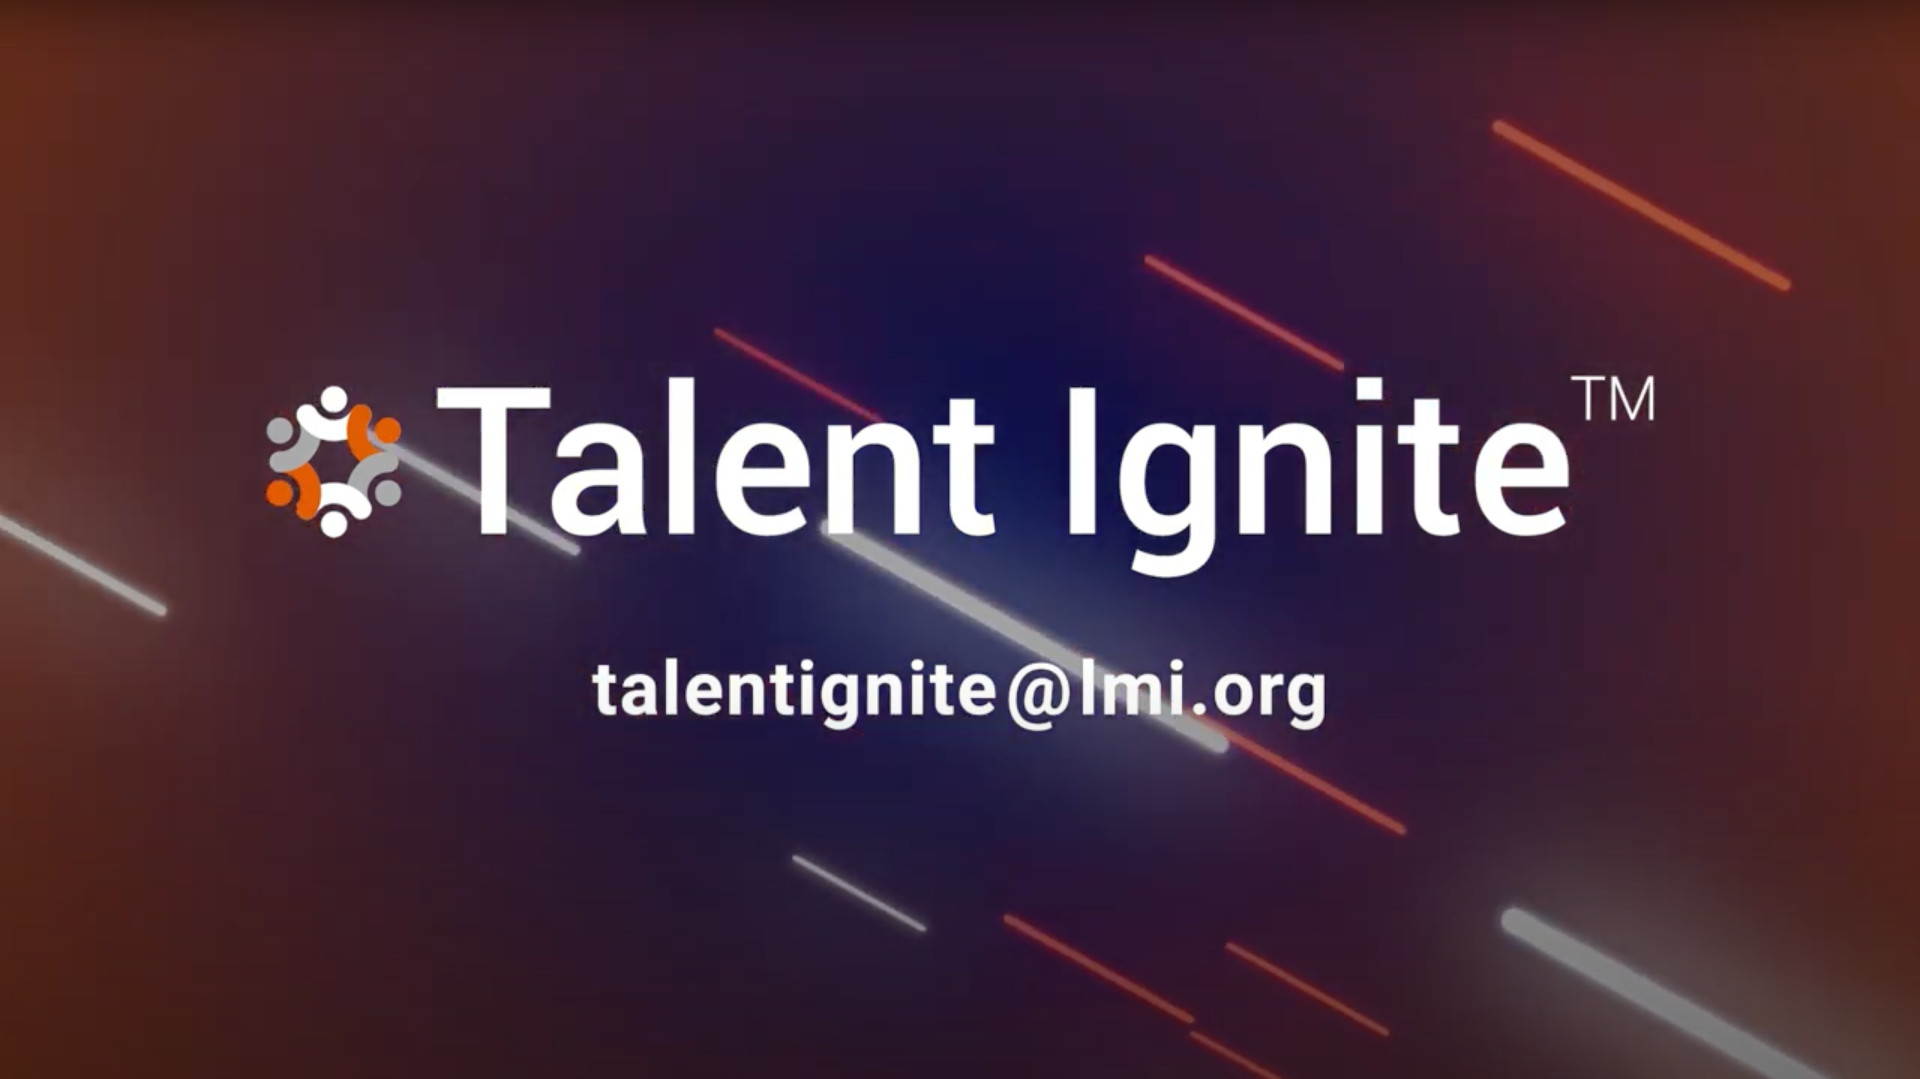 talent ignite logo and email address "talentignite.org"